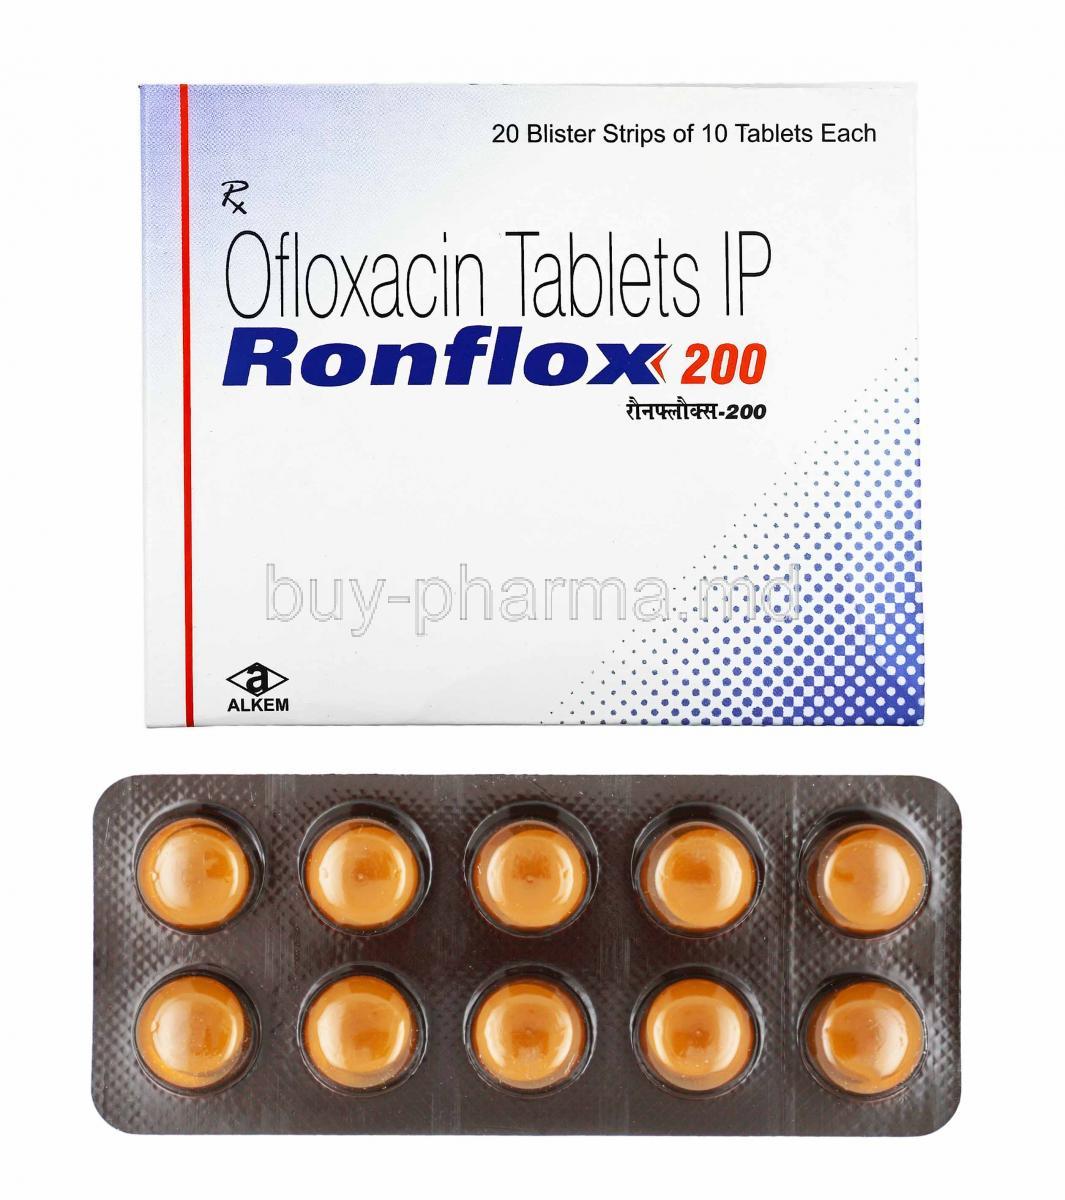 Ronflox, Ofloxacin 200mg box and tablets